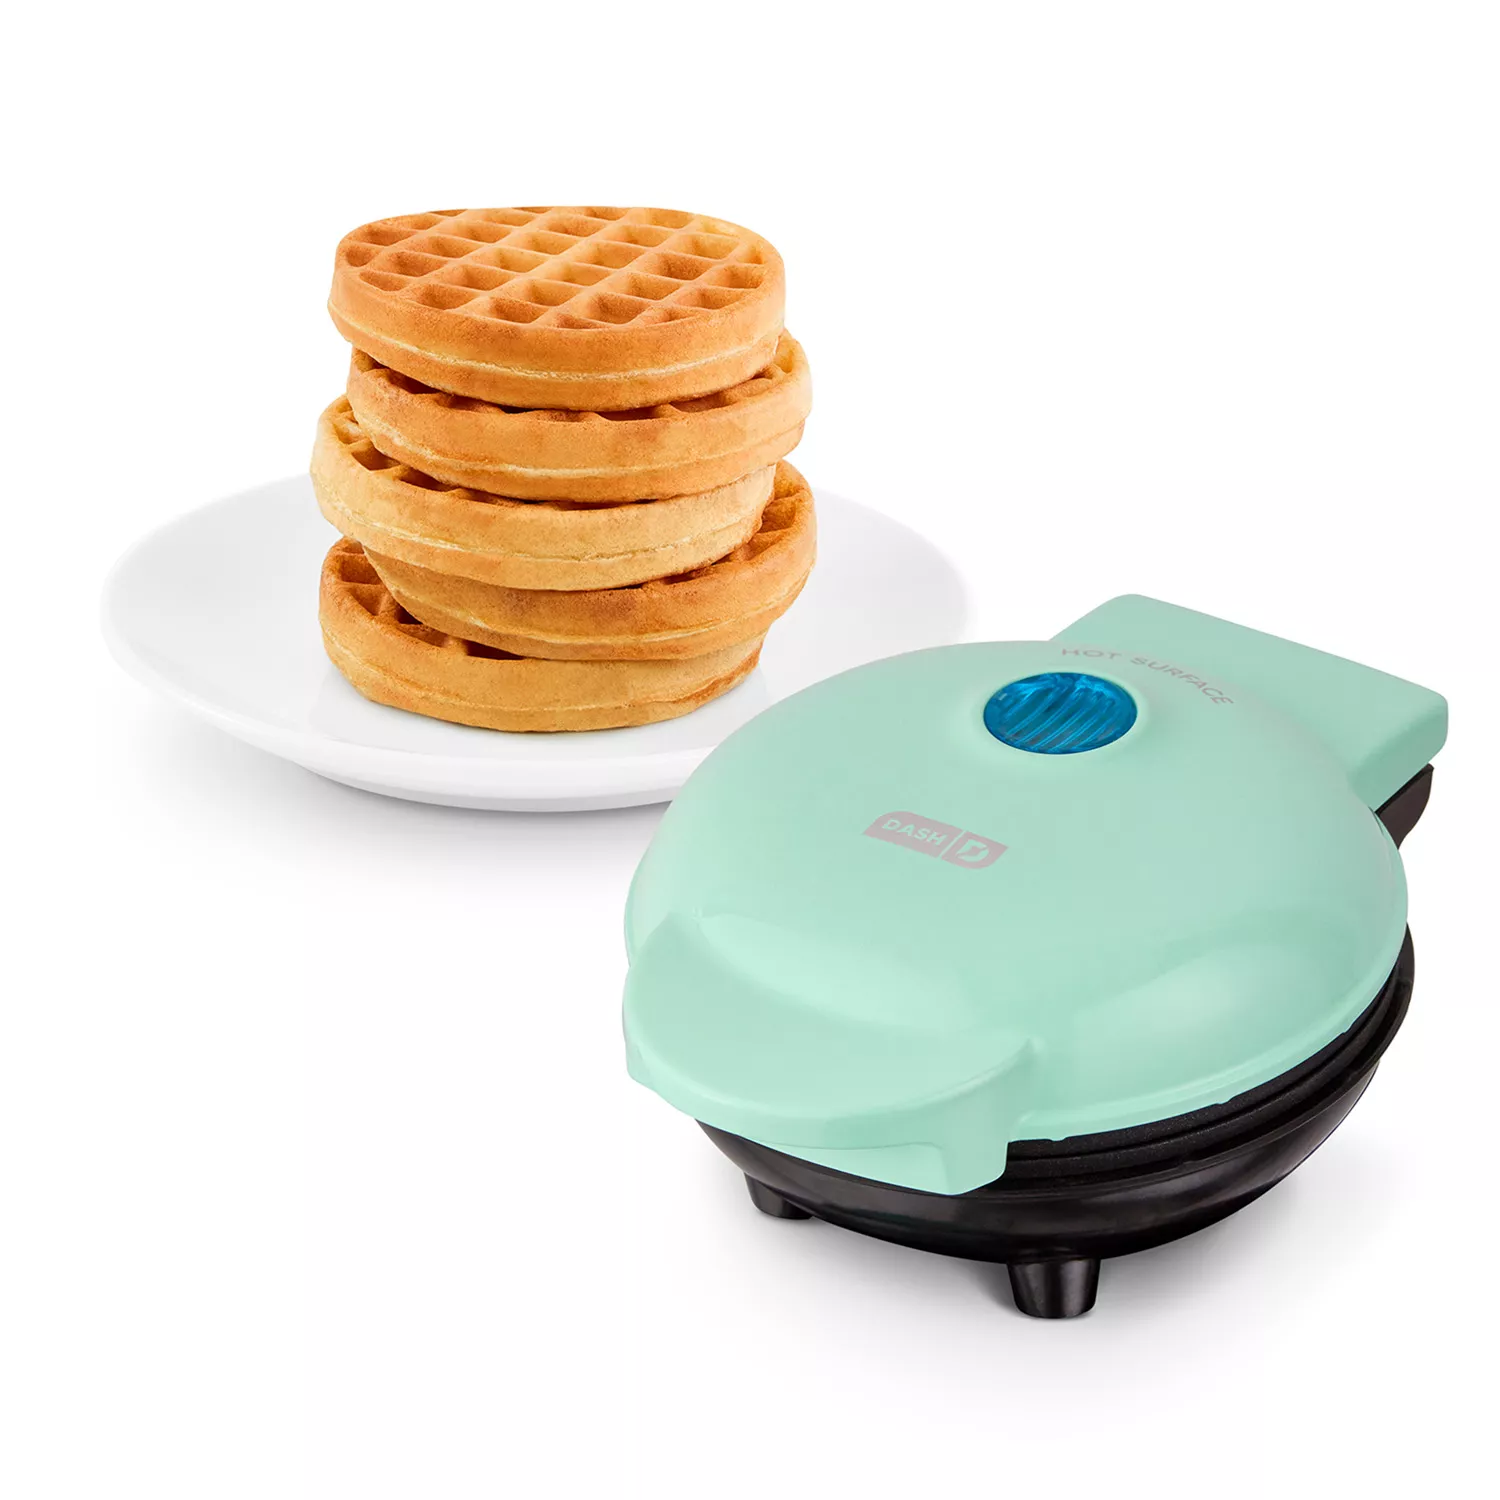 Dash Mini Waffle Bowl Maker - Aqua in 2023